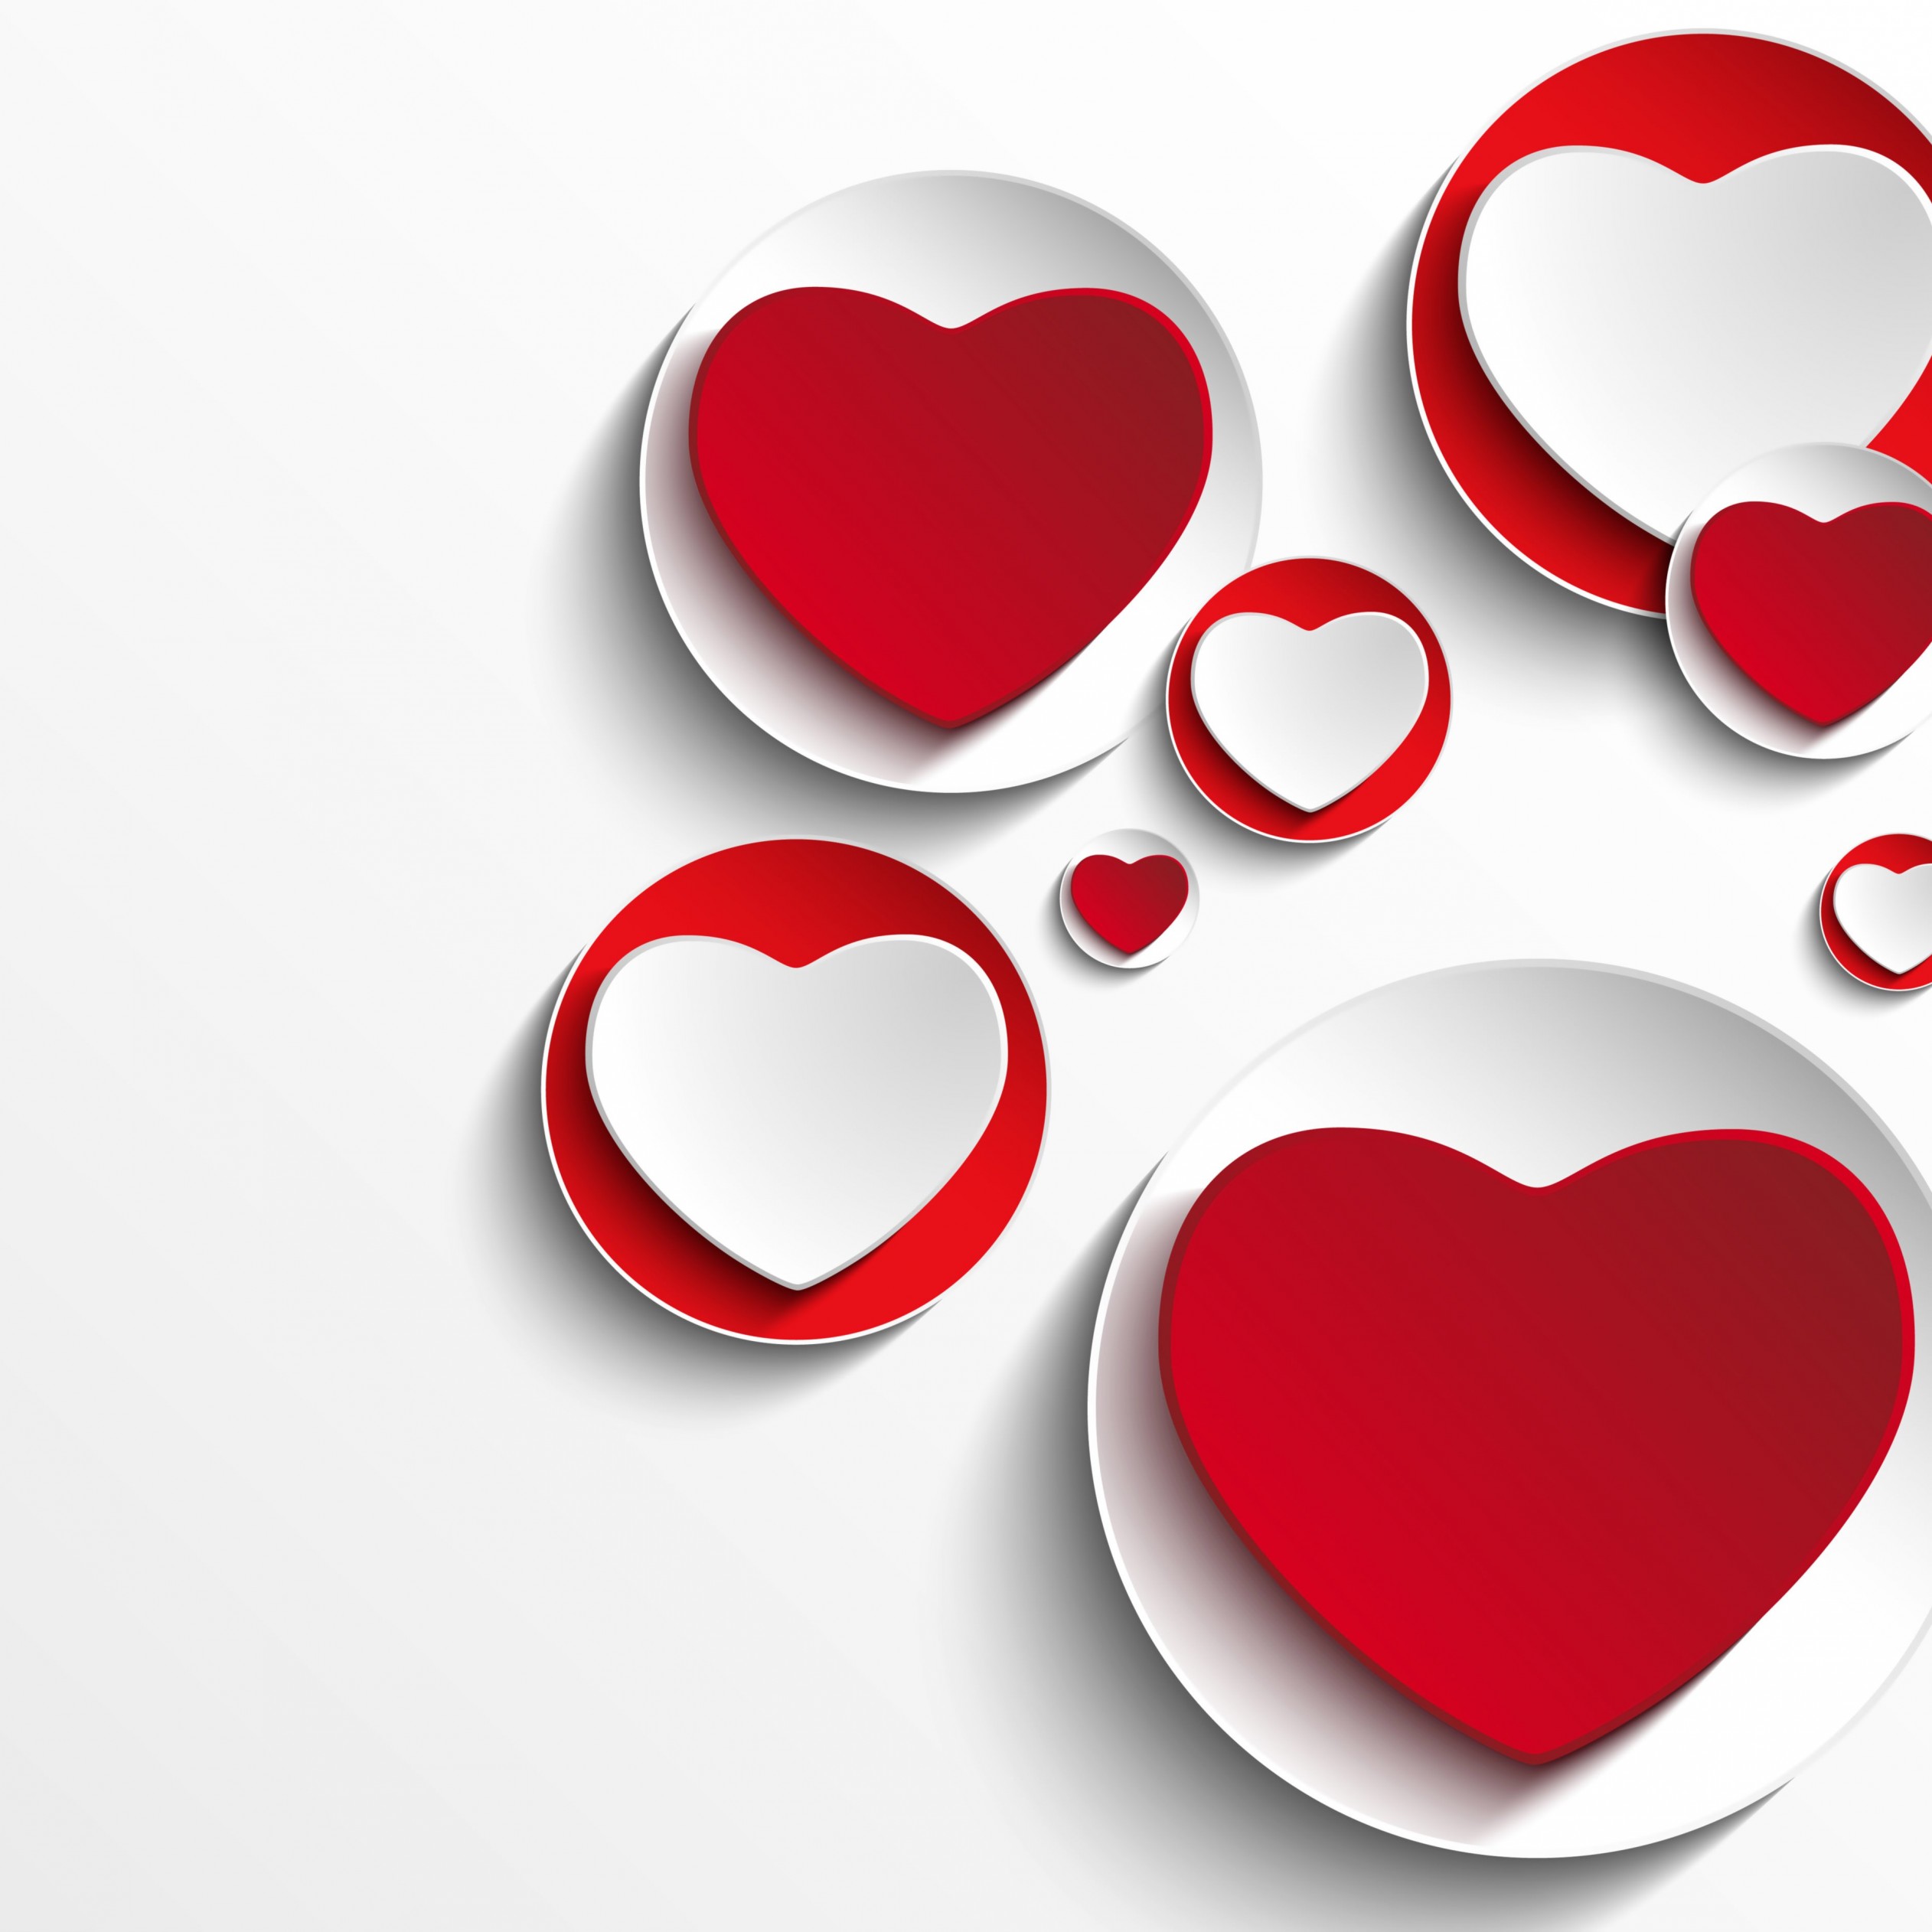 Minimalistic Hearts Shapes Wallpaper for Apple iPad 3